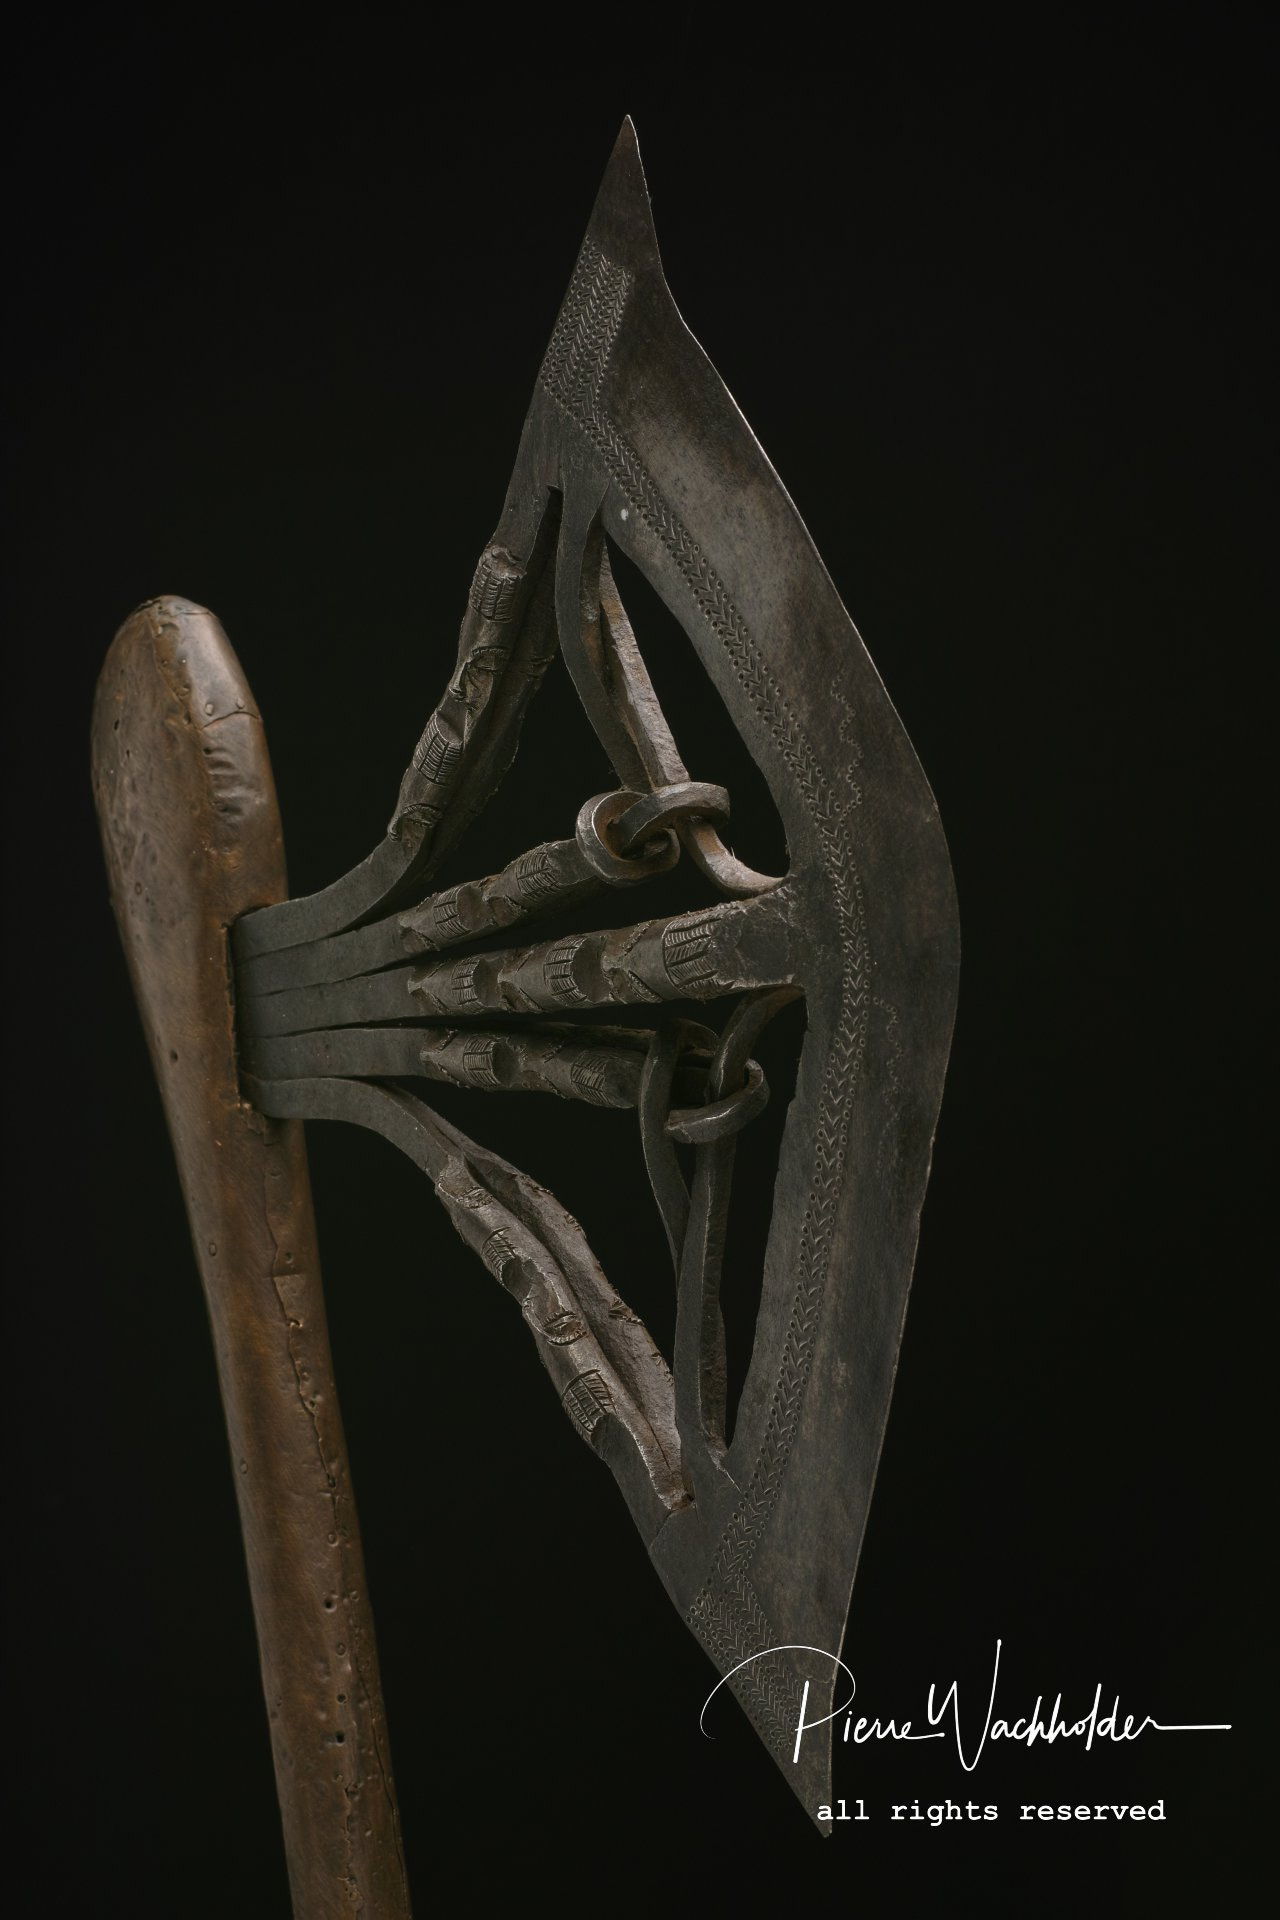 Sigma SD1 Merrill sample photo. Ceremonial axe kilonda , musee africain de namur photography